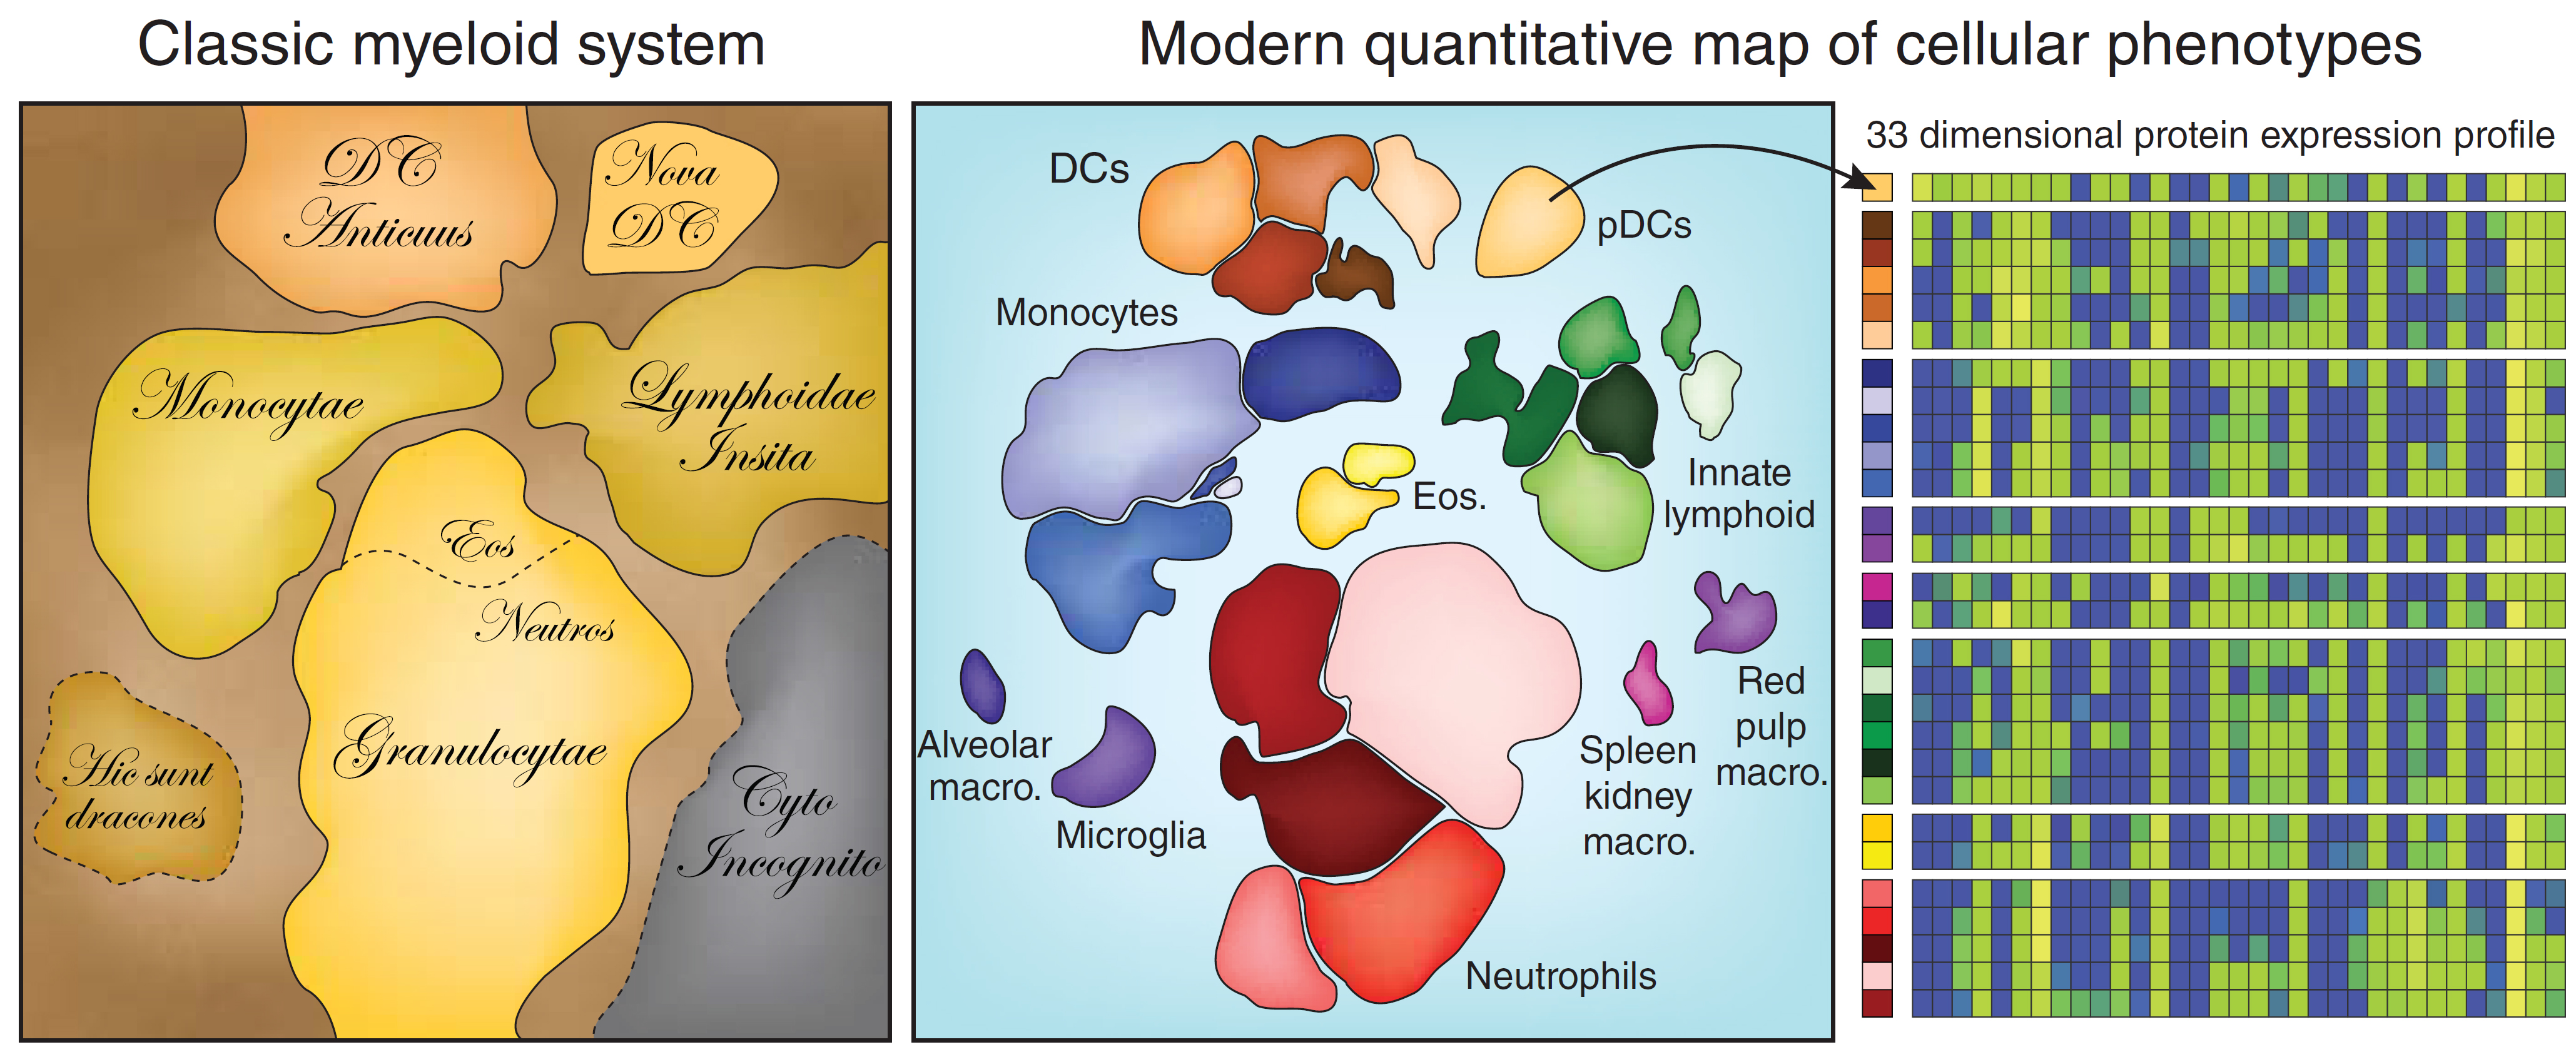 Irish, Nature Immunology 2014 - t-SNE maps the cellular world